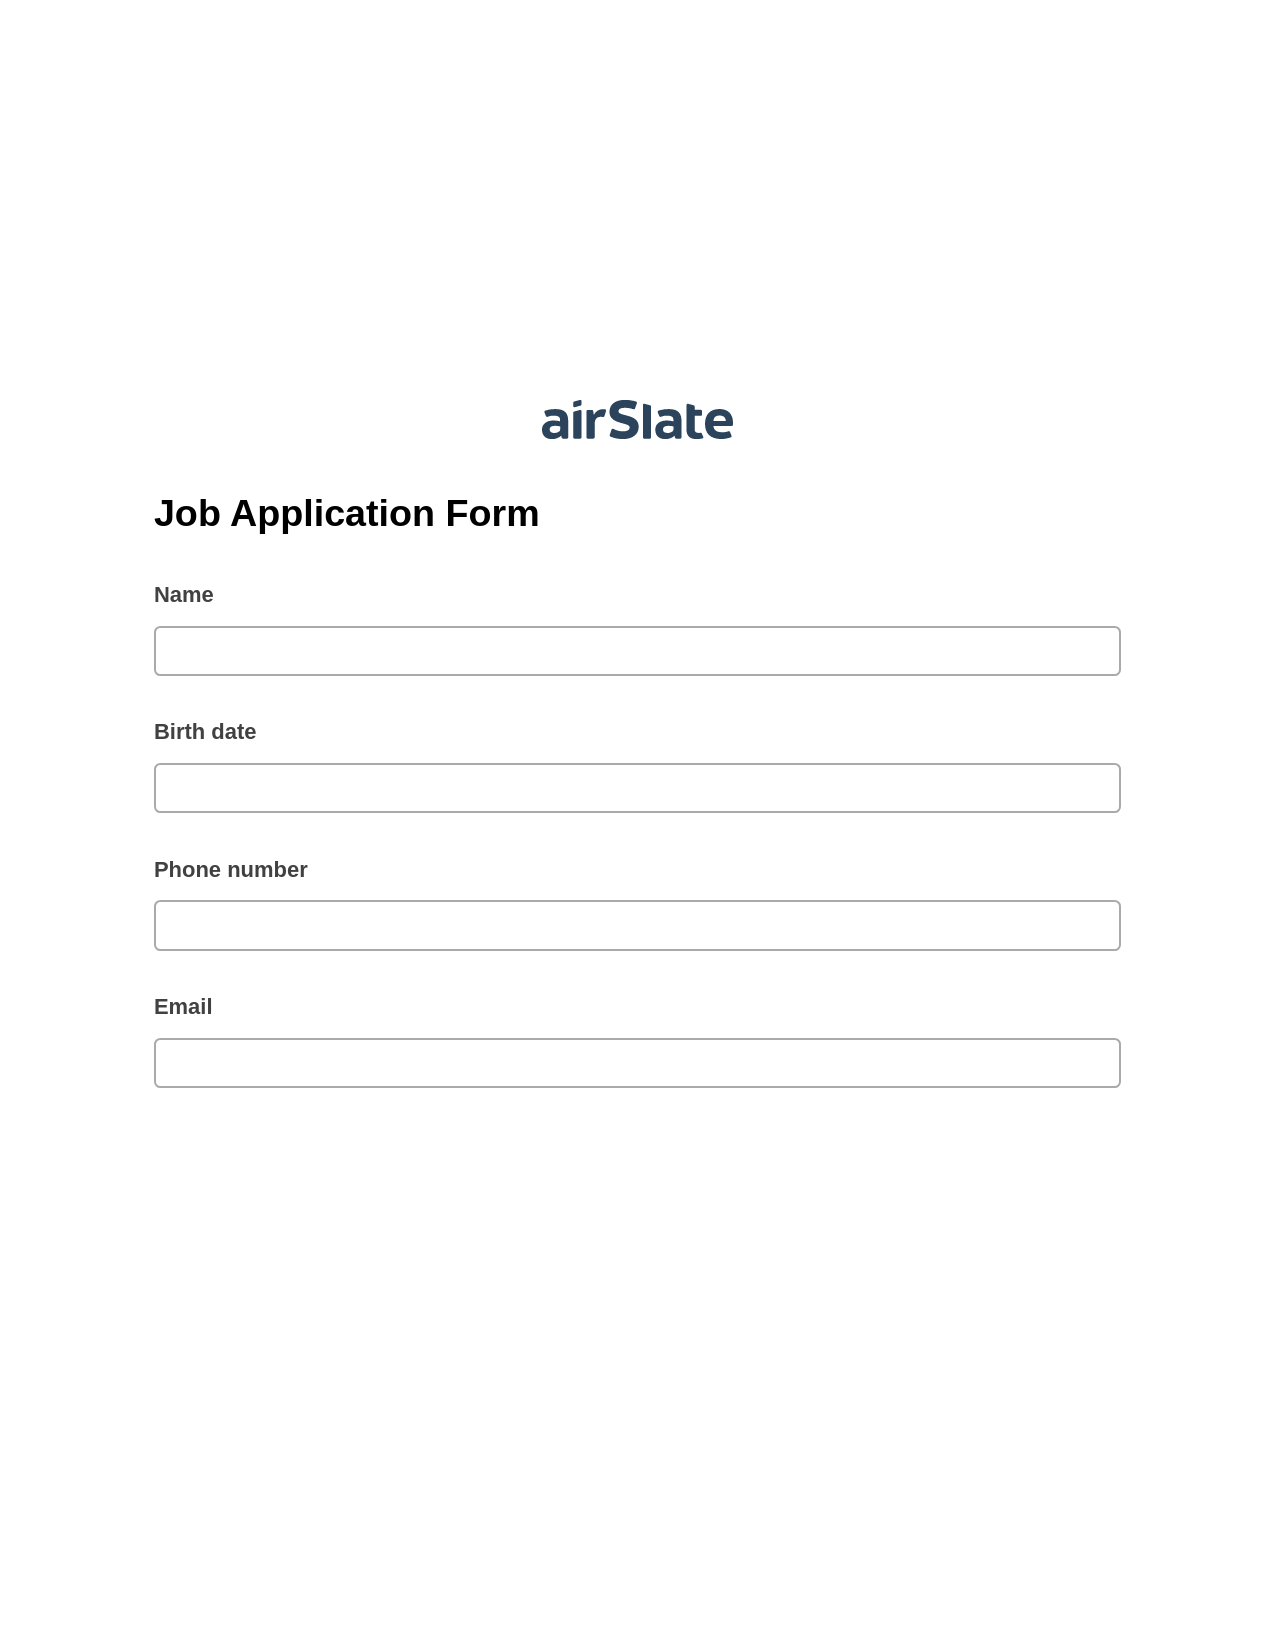 Multirole Job Application Form Pre-fill from MySQL Bot, Create MS Dynamics 365 Records Bot, Dropbox Bot